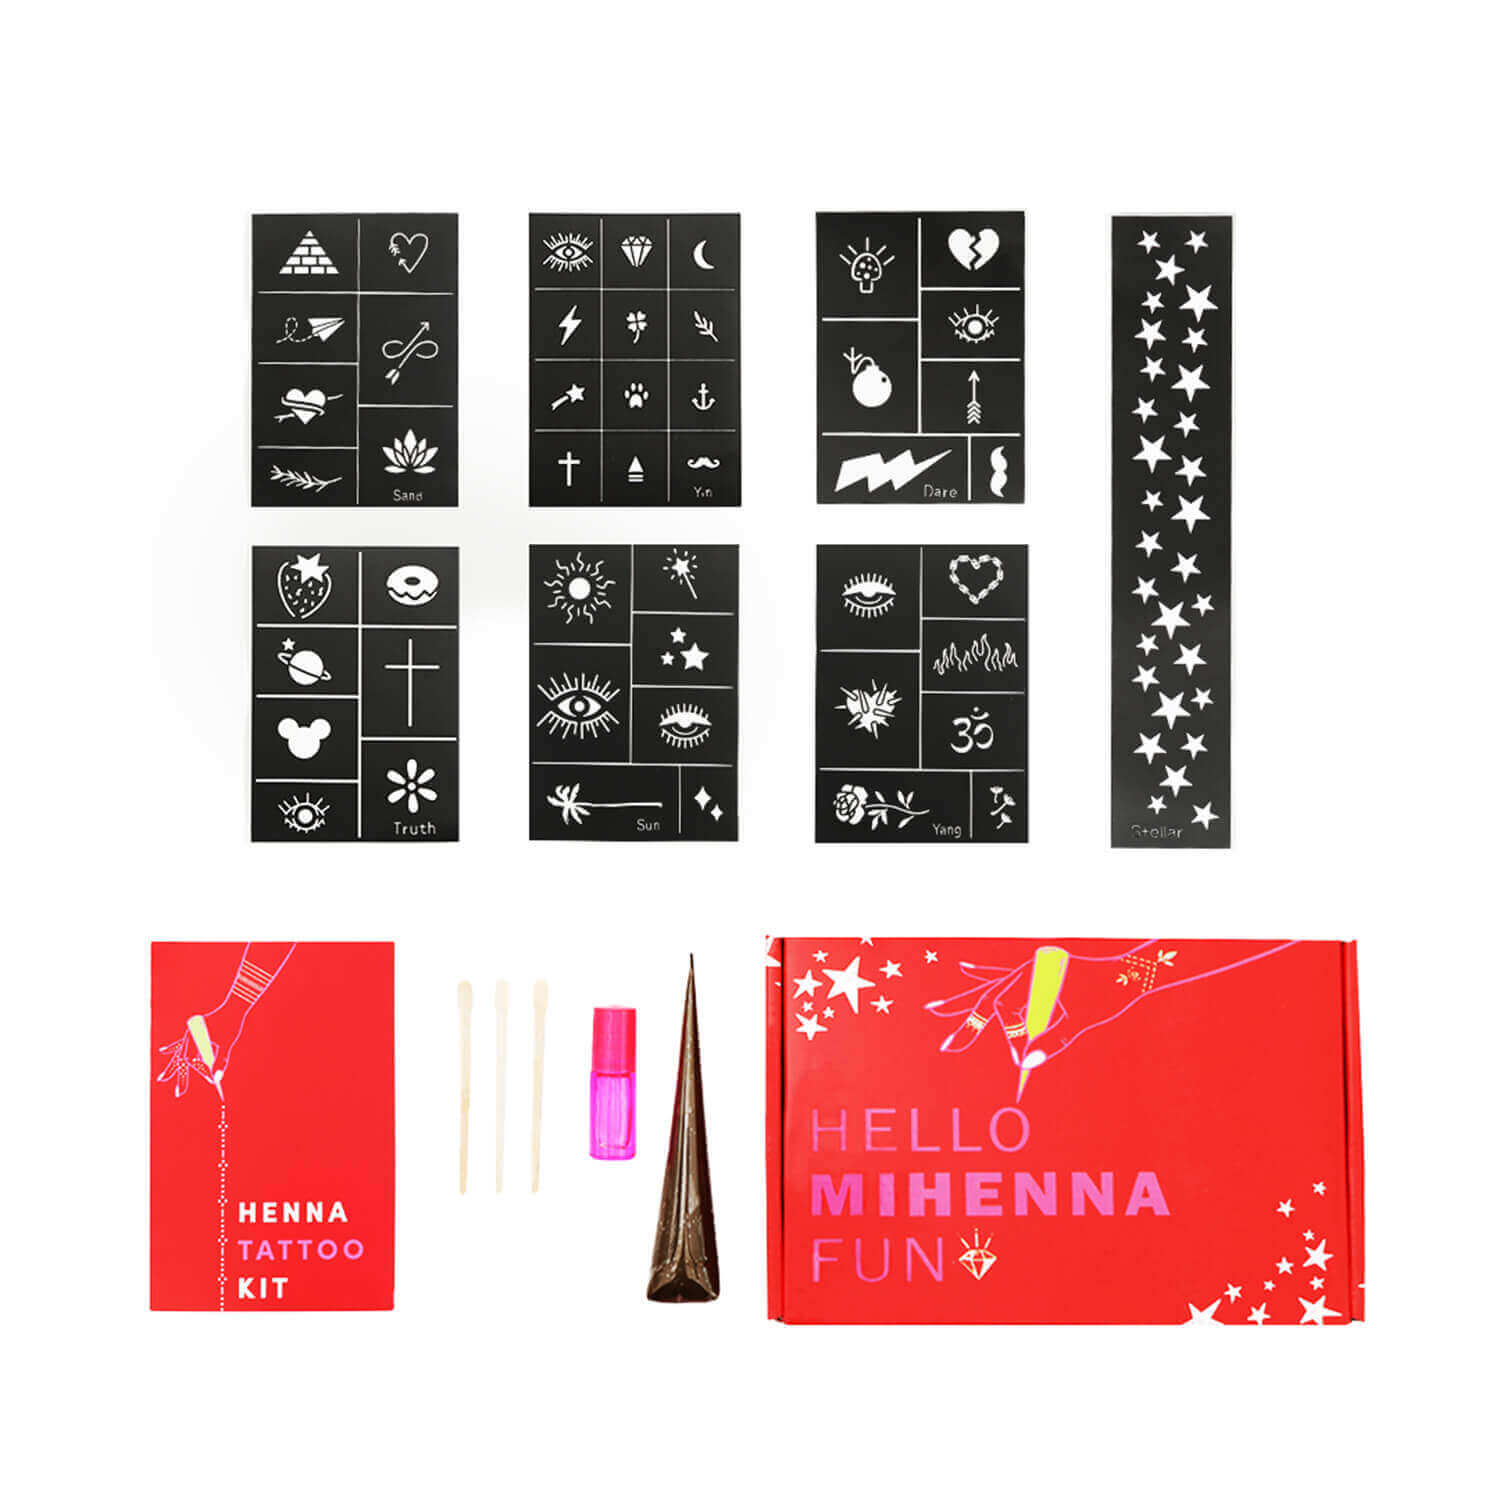 Mihenna Henna Cone 3 Pack